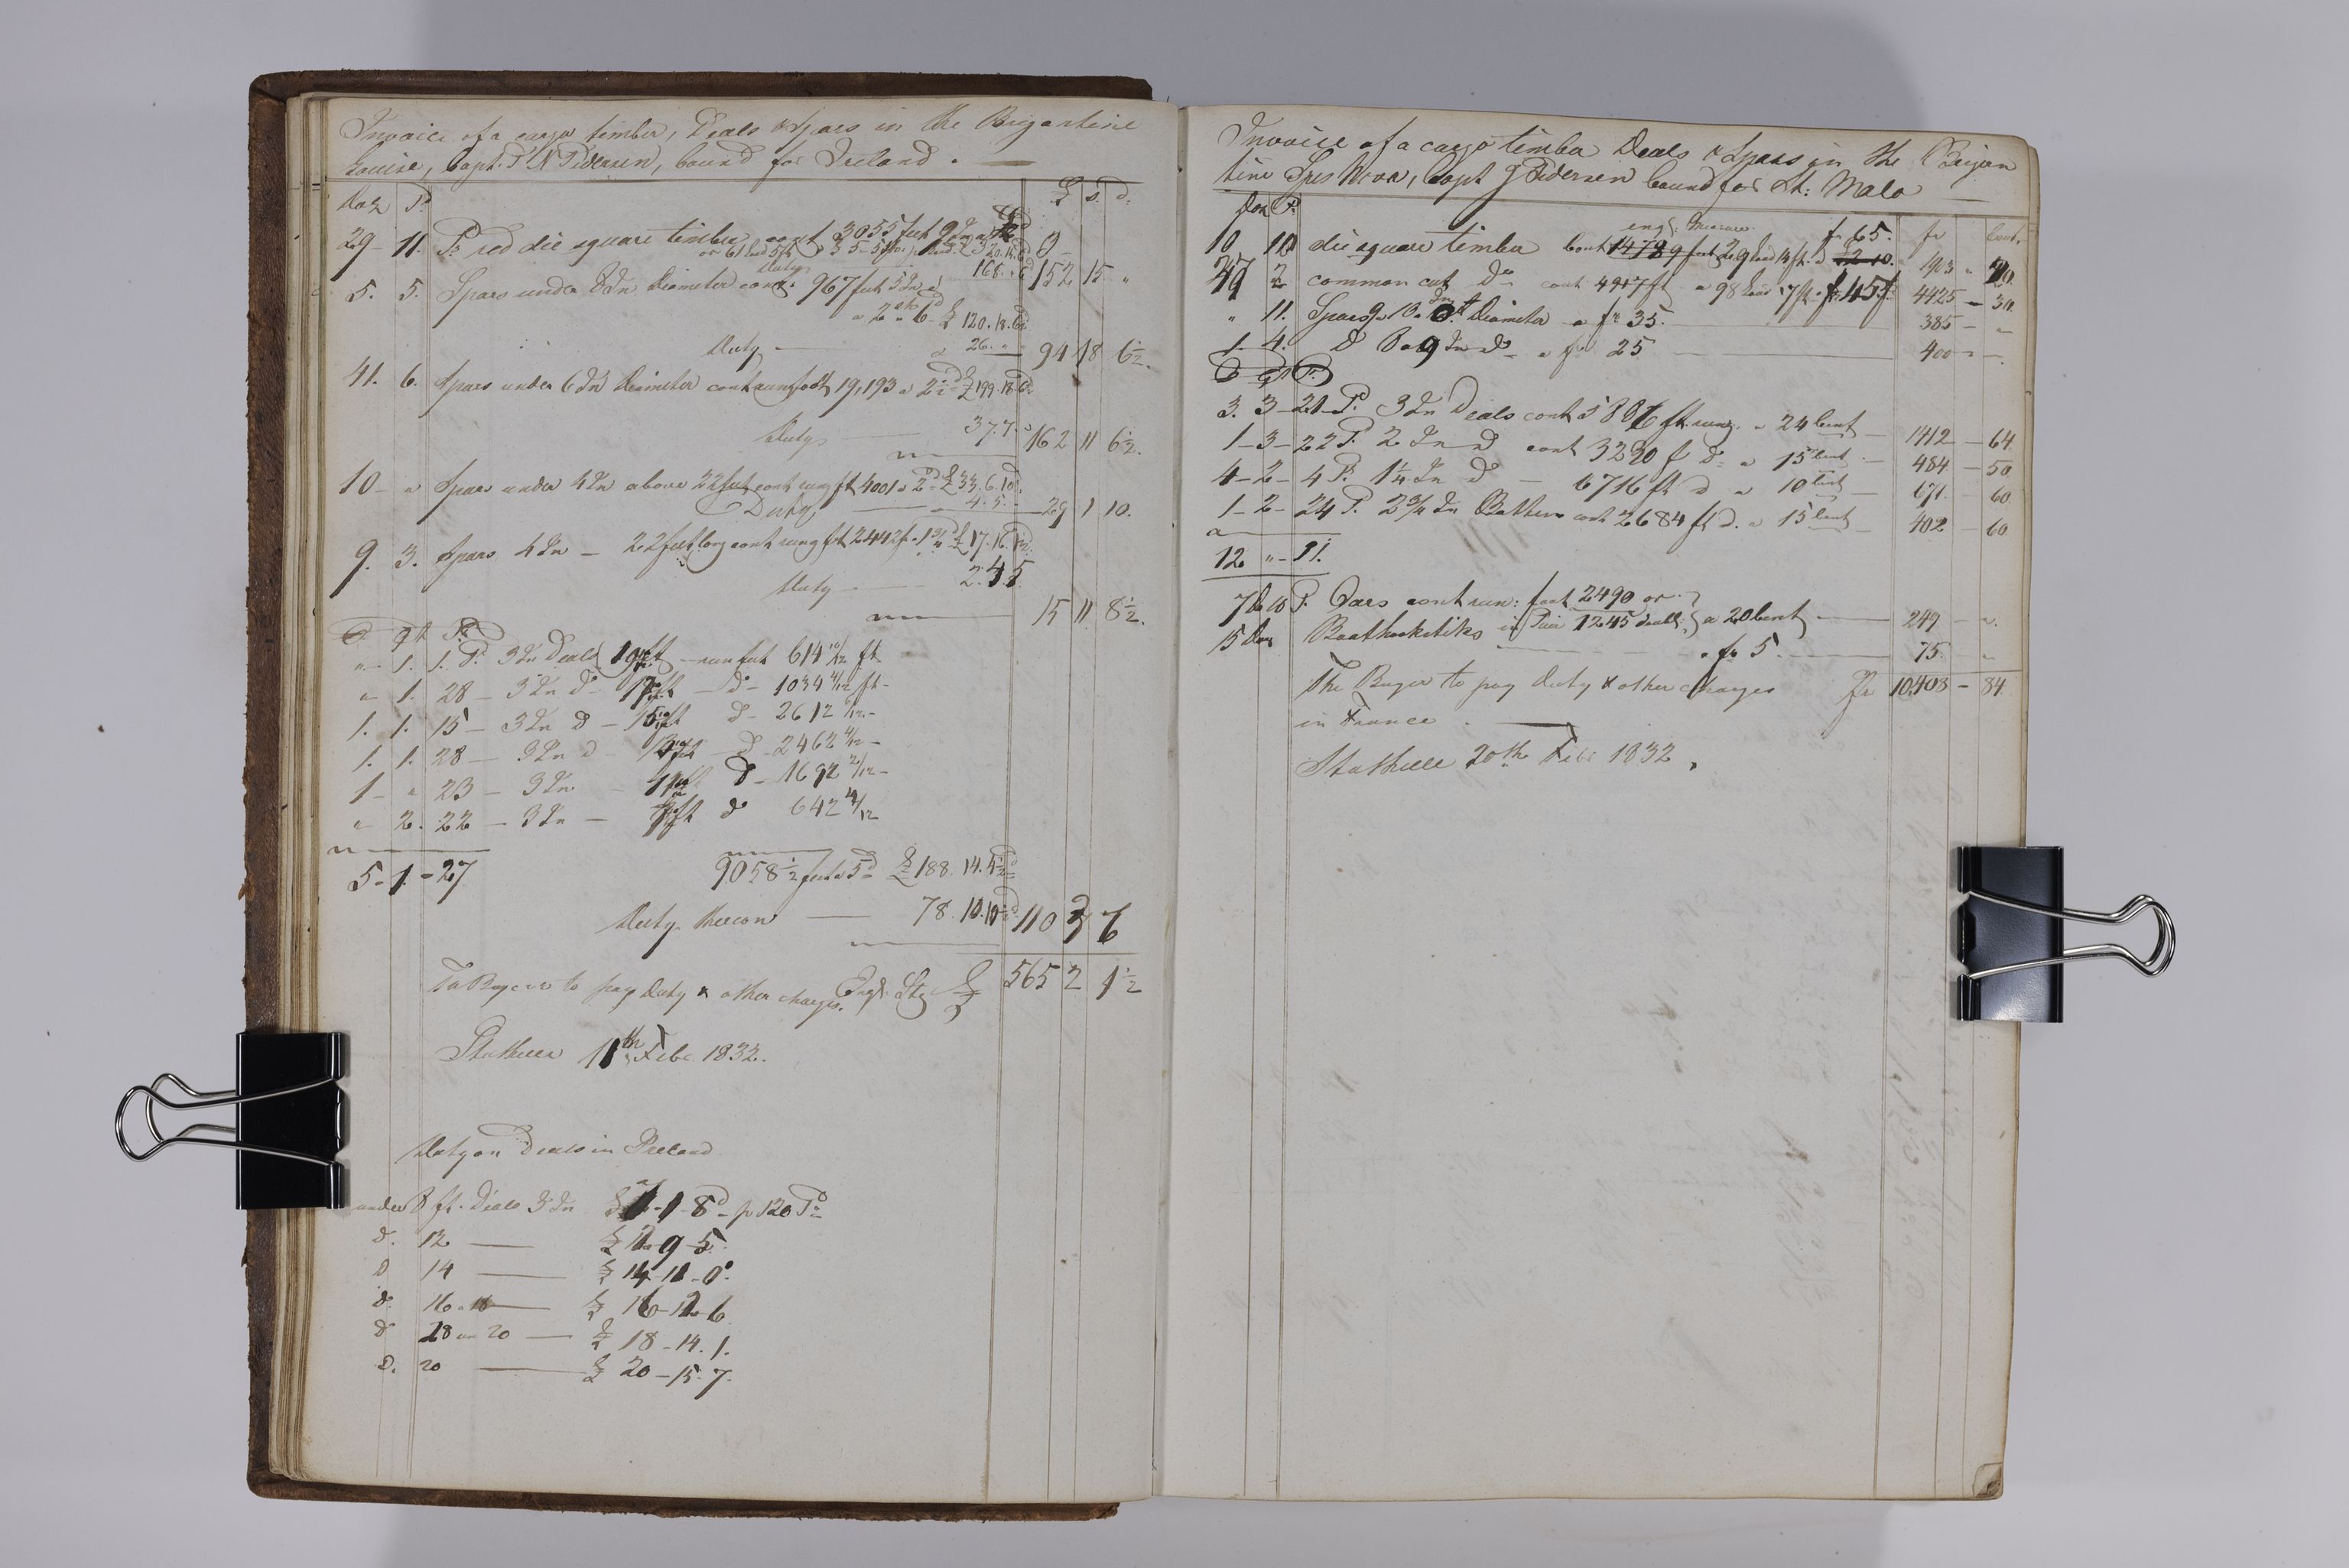 , Priscourant-tømmerpriser, 1834-38, 1834-1838, p. 30